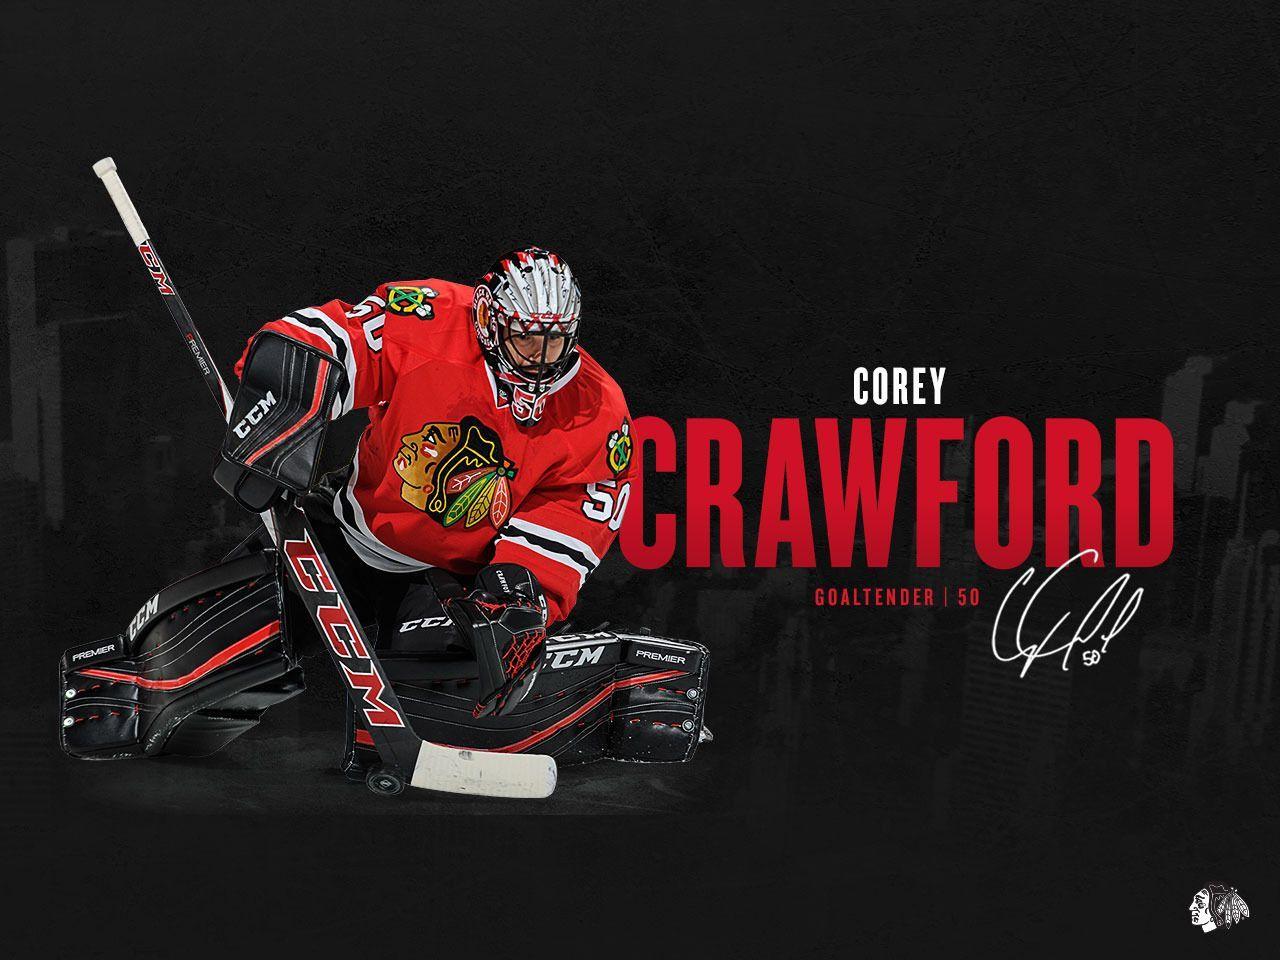 Corey Crawford. #Crow #Blackhawks. Our Chicago Blackhawks